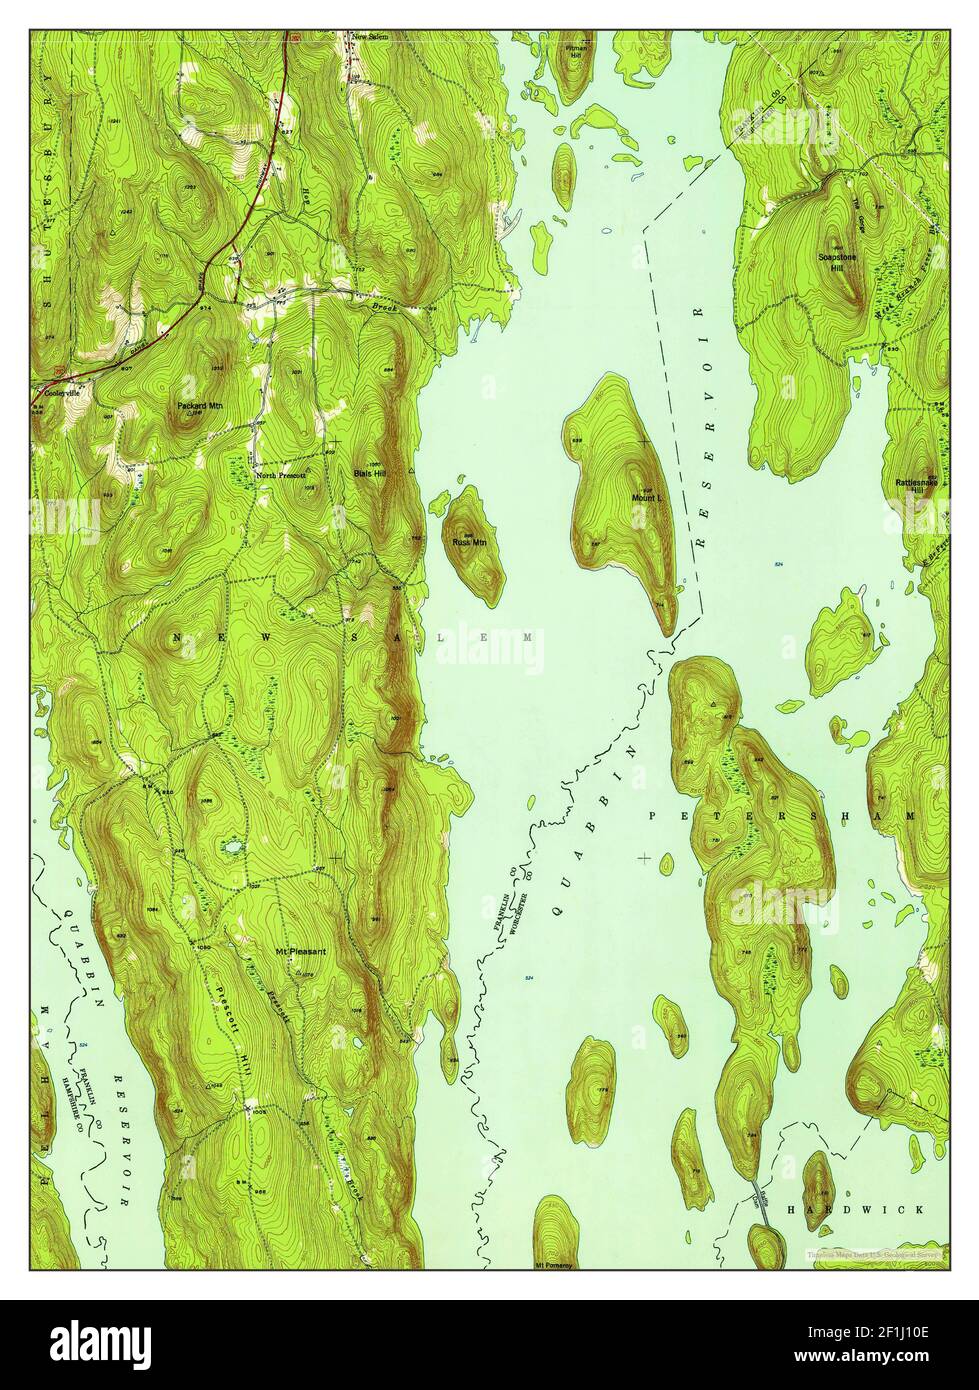 Quabbin Reservoir, Massachusetts, map 1952, 1:31680, United States of America by Timeless Maps, data U.S. Geological Survey Stock Photo